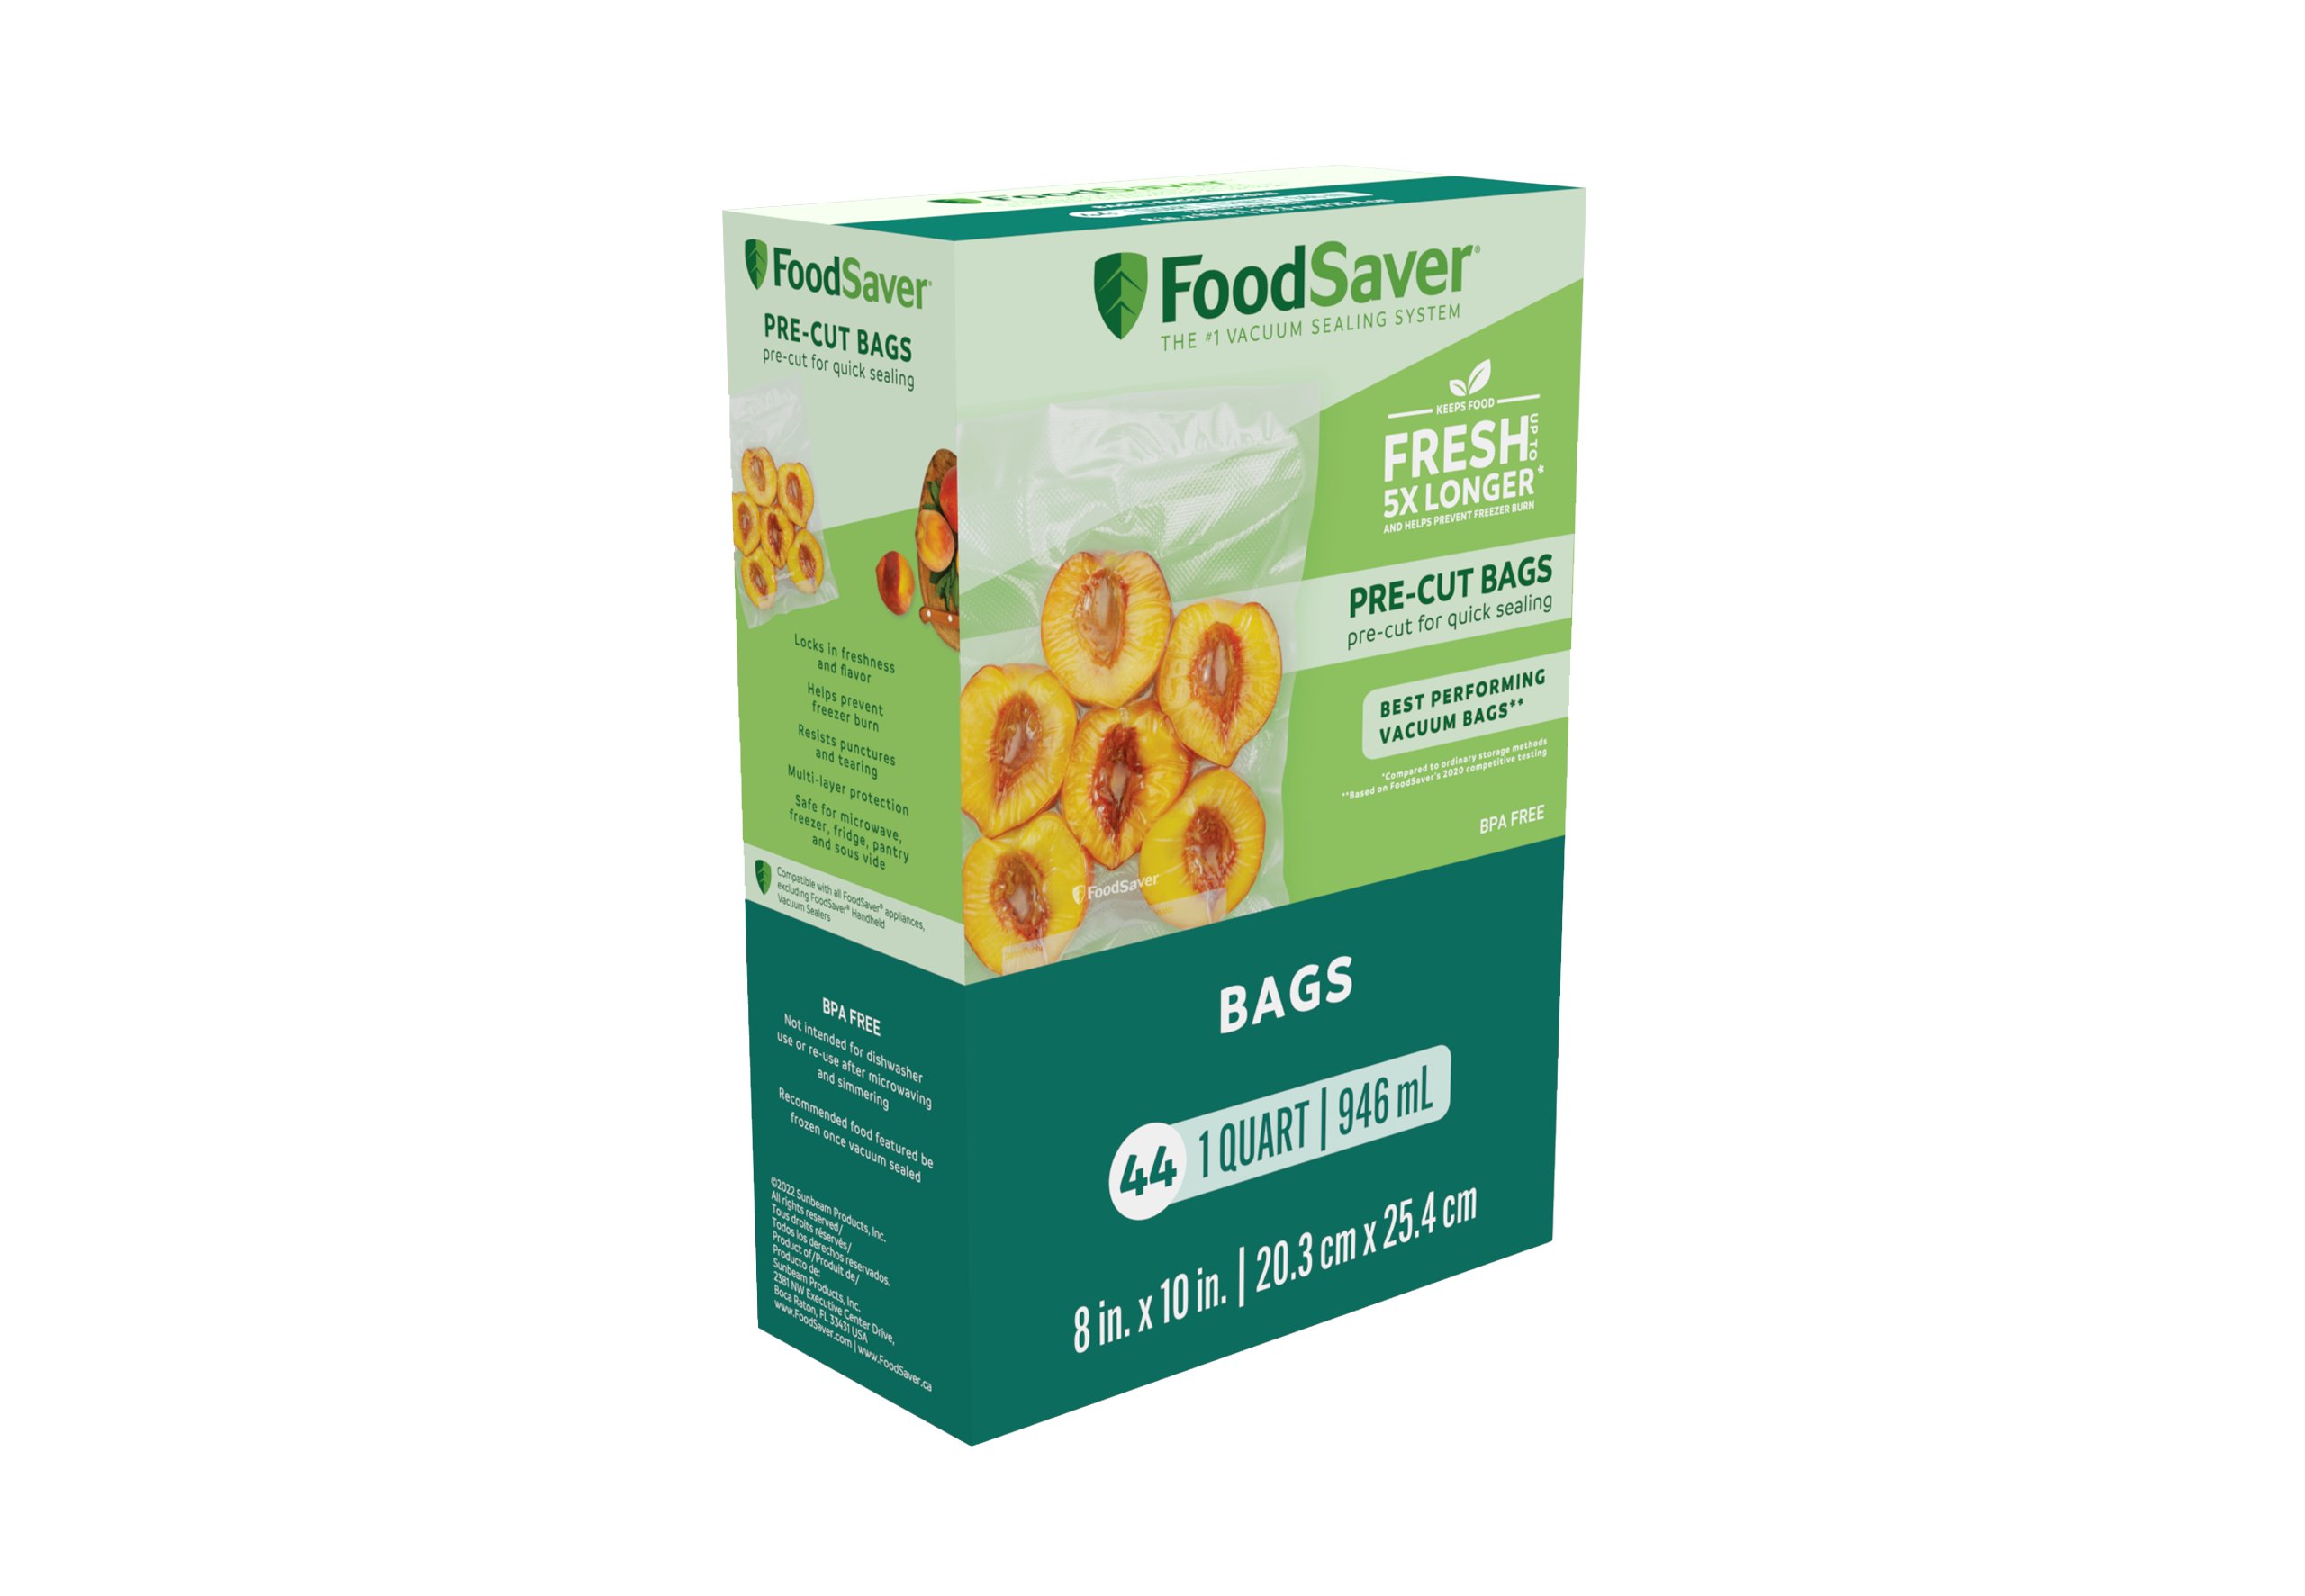 FoodSaver Vacuum Sealer Bags for Airtight Food Storage and Sous Vide, 1  Quart Precut Bags (44 Count)